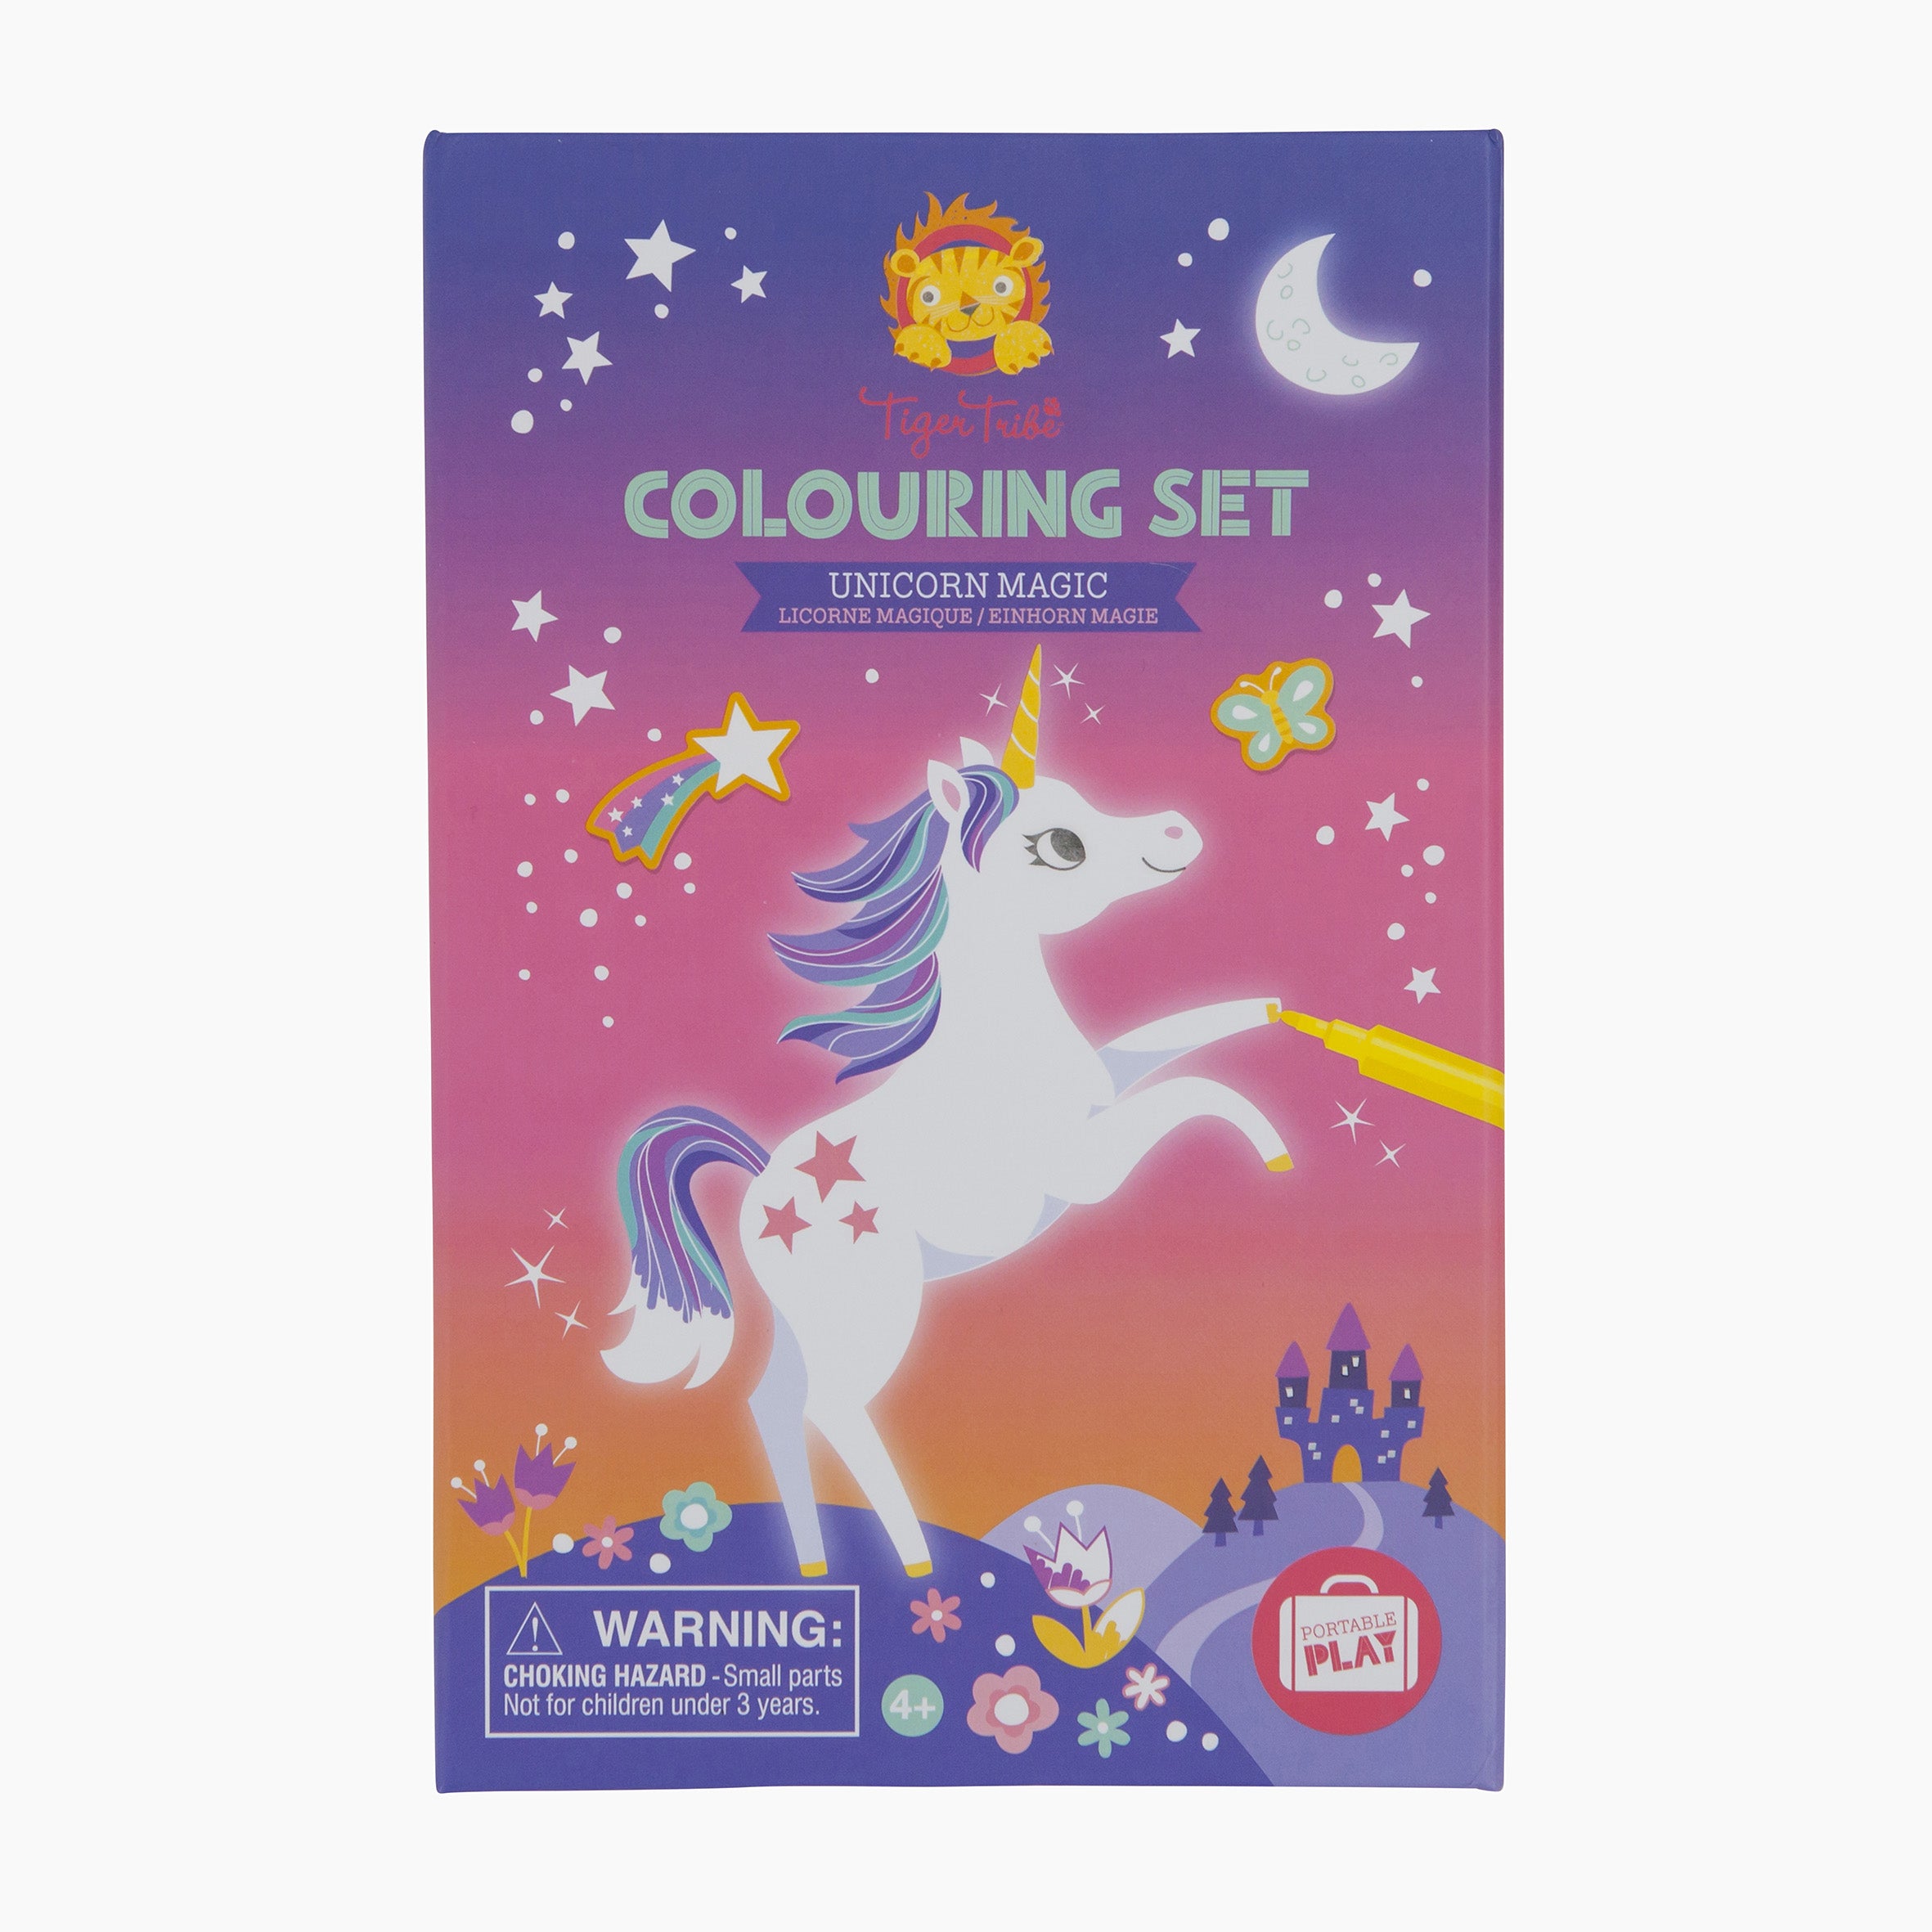 Colouring Set Unicorn Magic